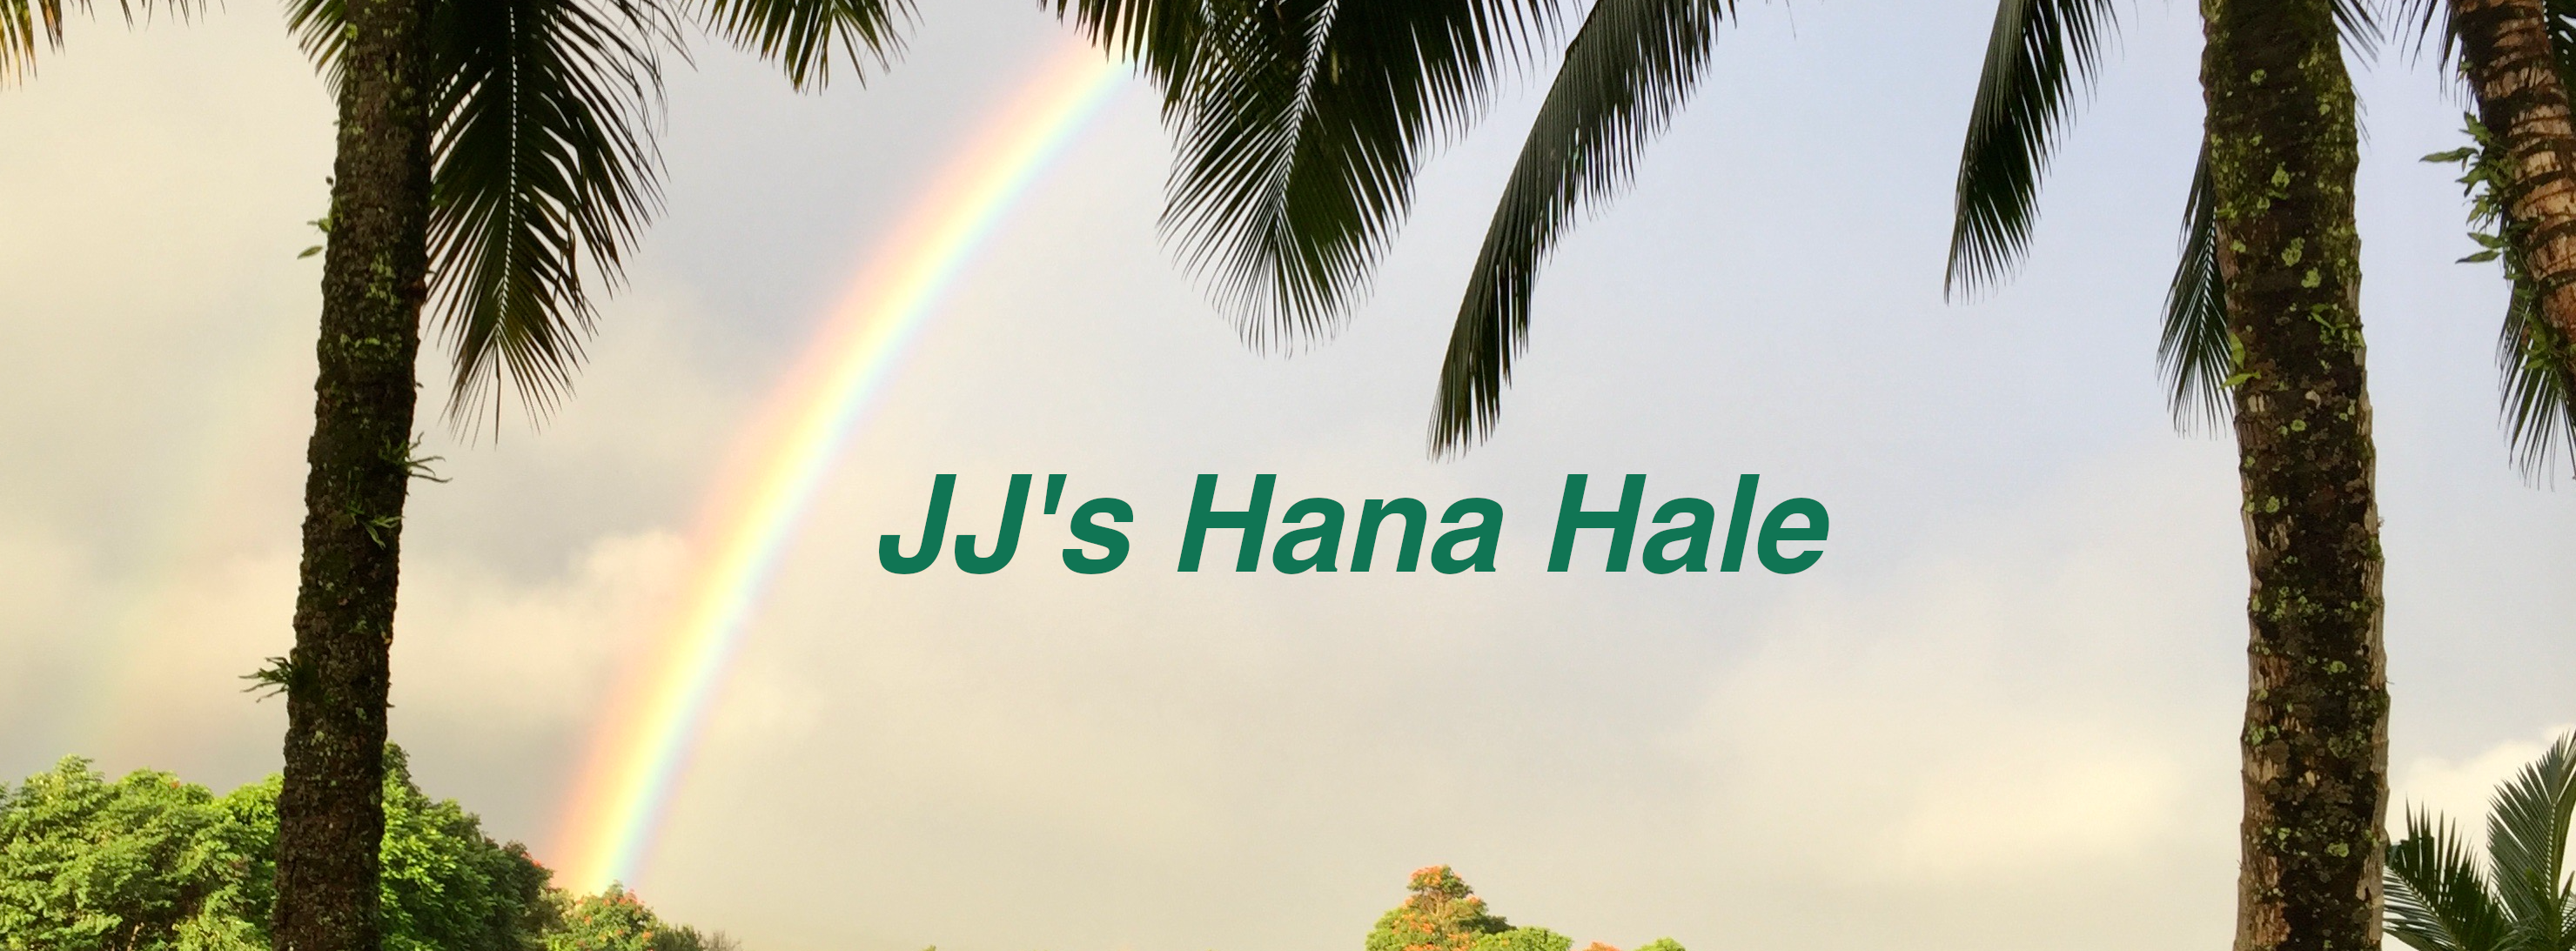 JJ's Hana Hale